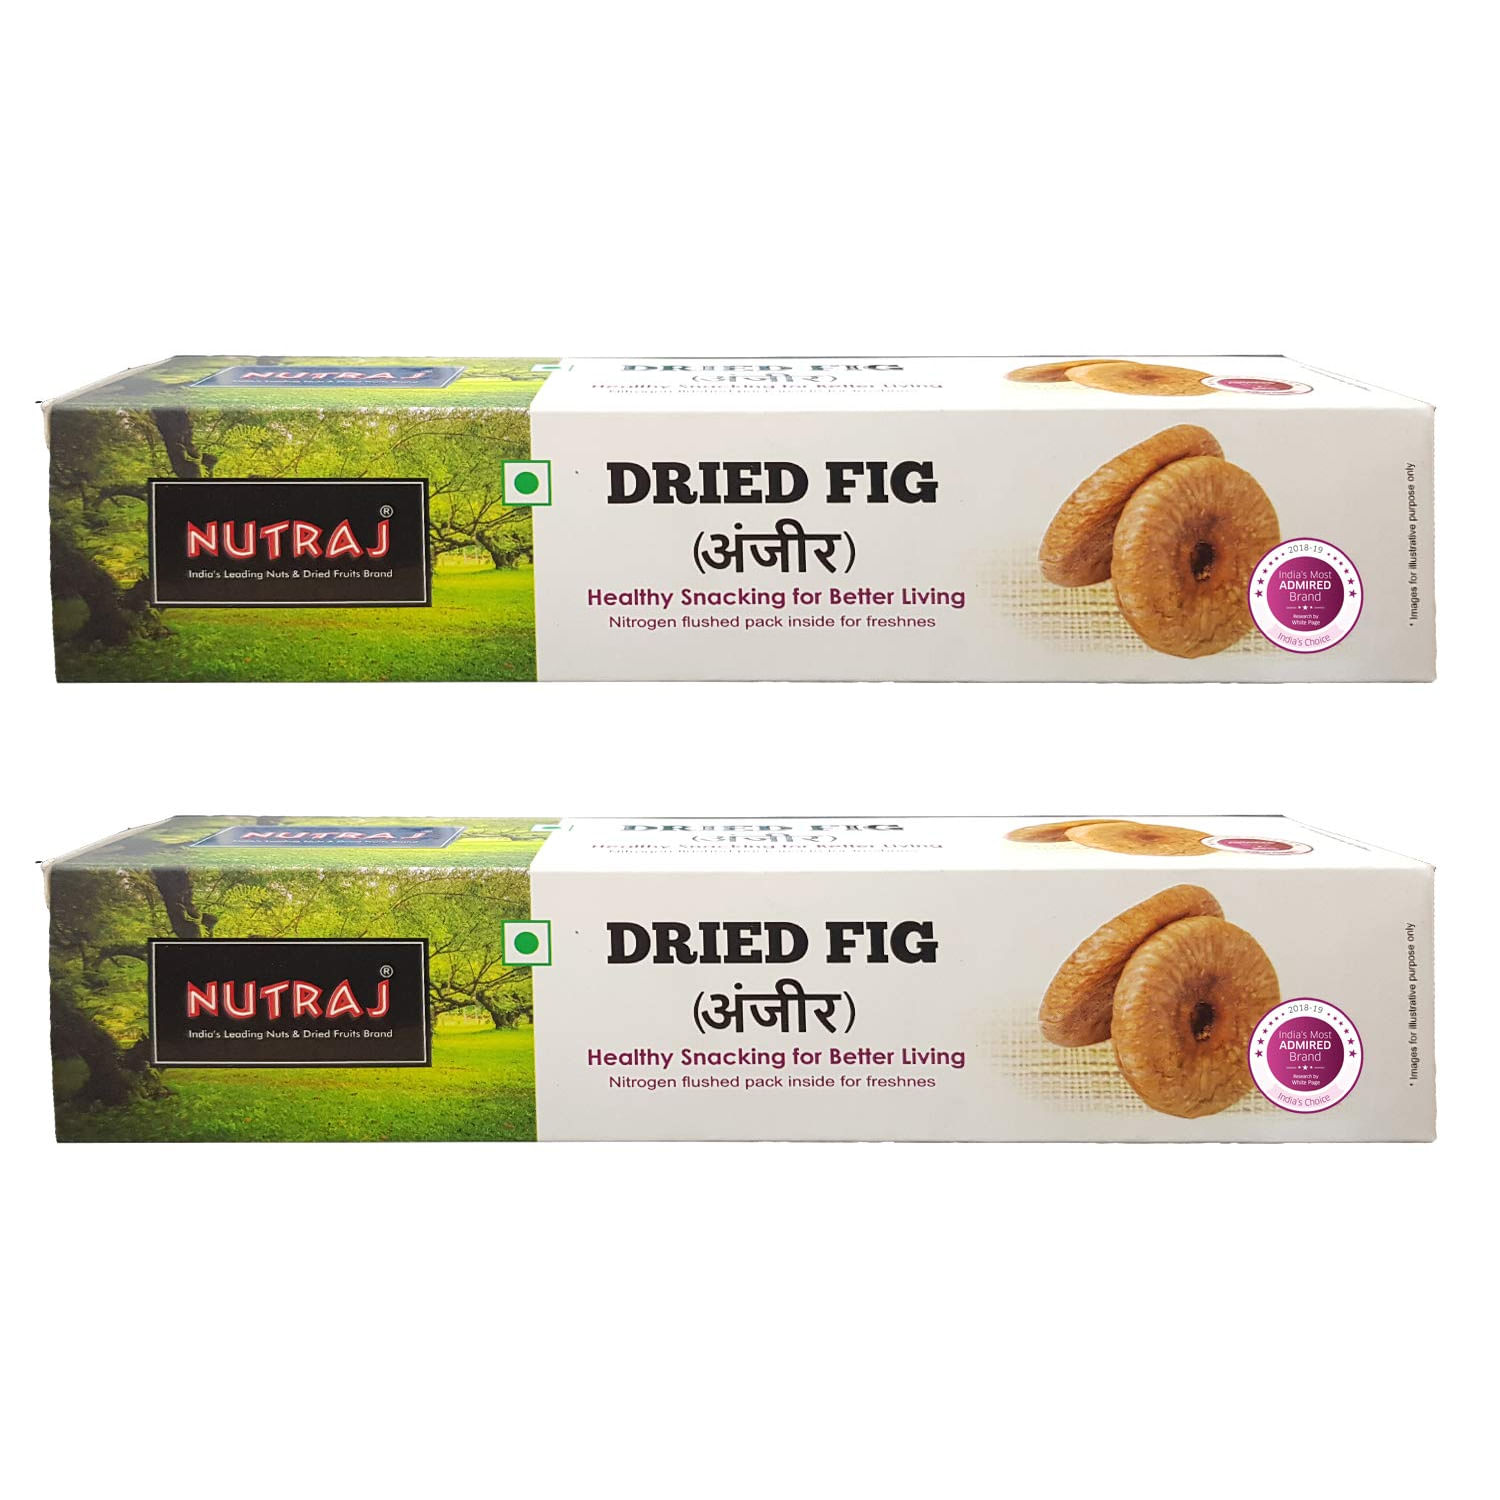 Nutraj Dried Fig (Anjeer) 400g (2 X 200g)